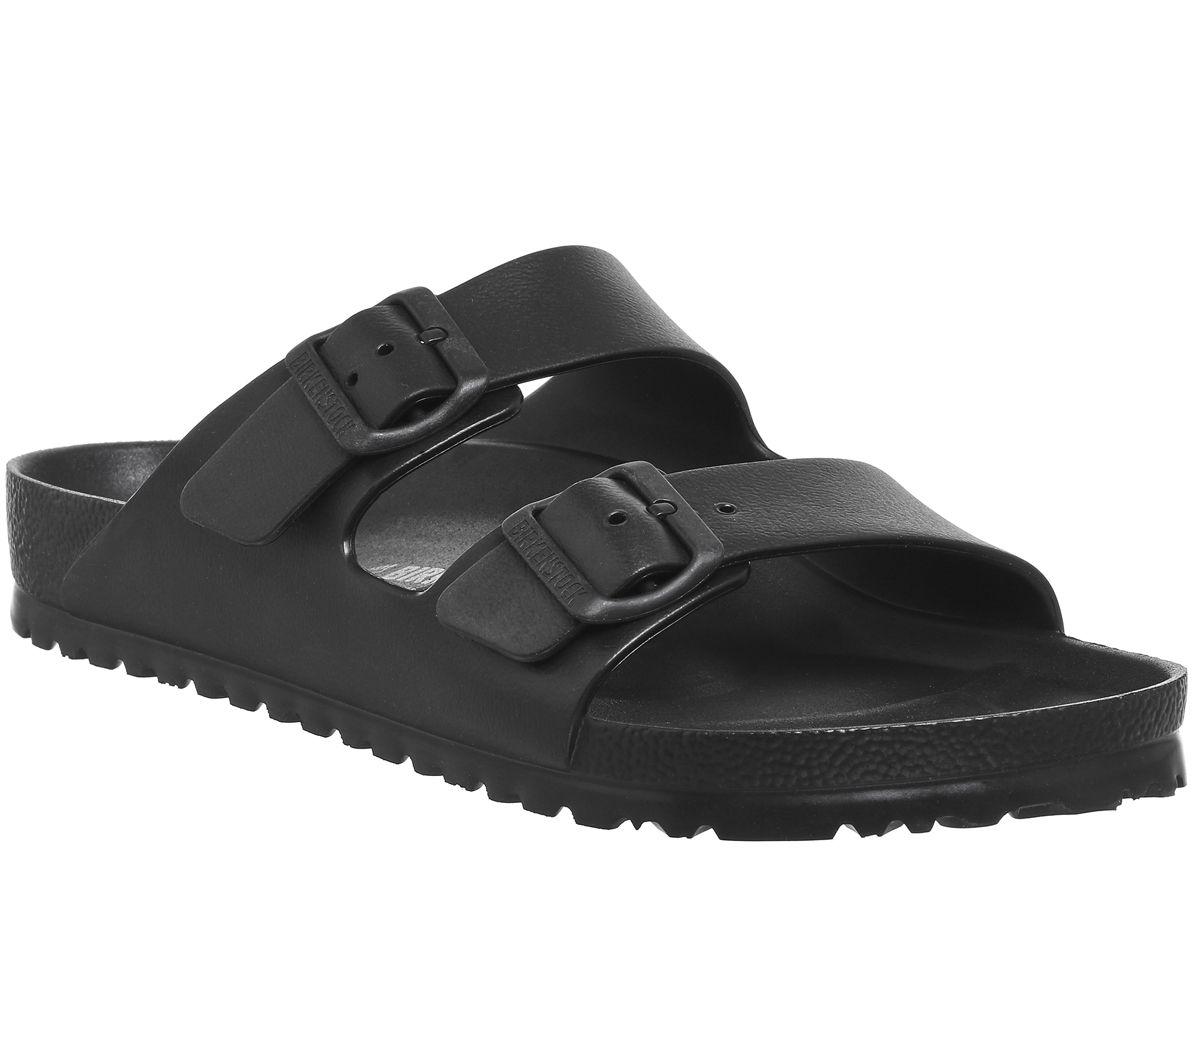 Birkenstock Synthetic Arizona Two Strap Sandals in Black for Men - Lyst